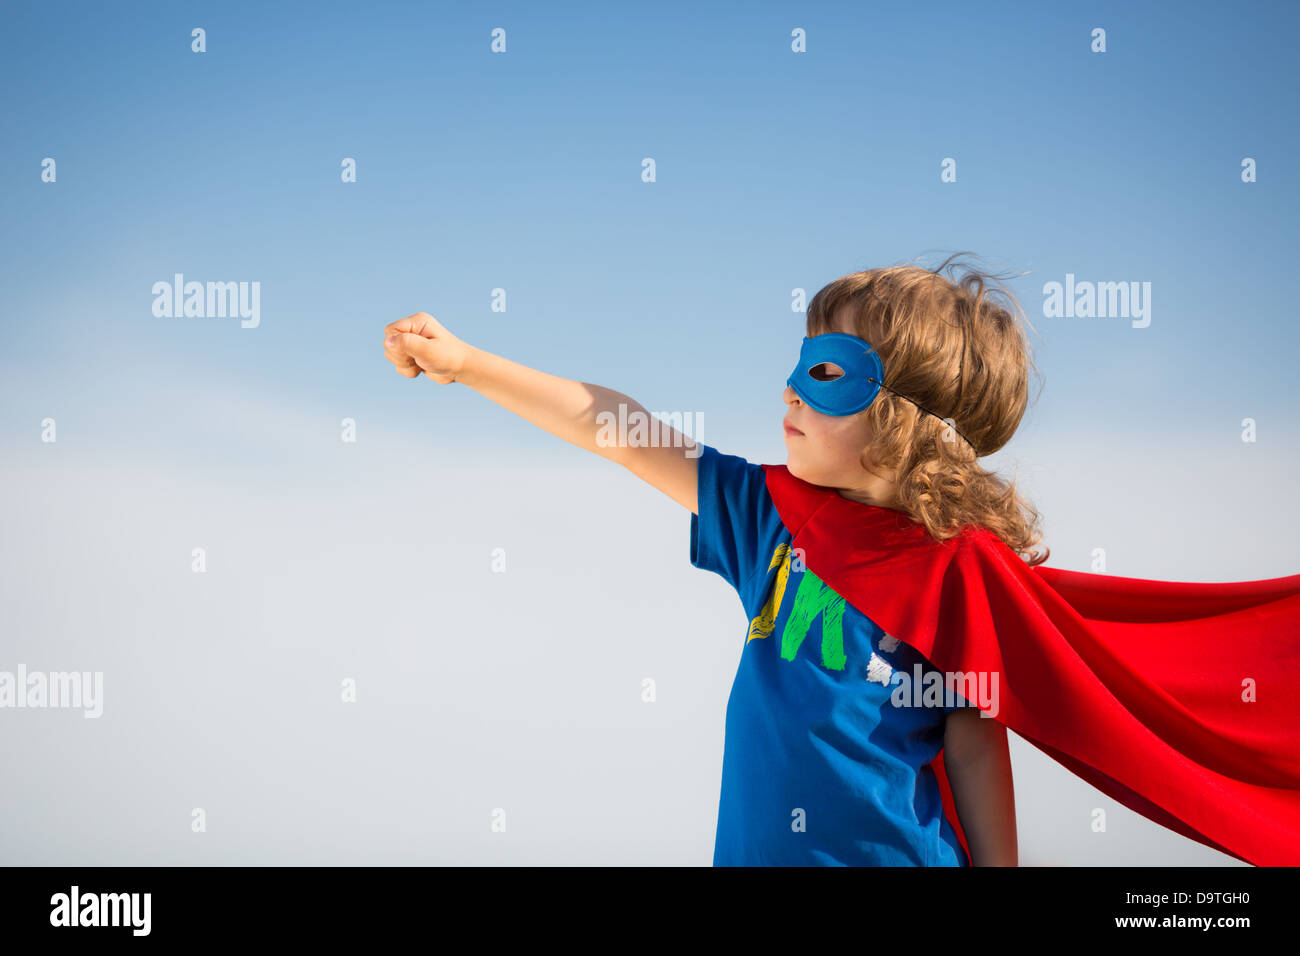 Superhero kid against blue sky background. Girl power concept Stock Photo